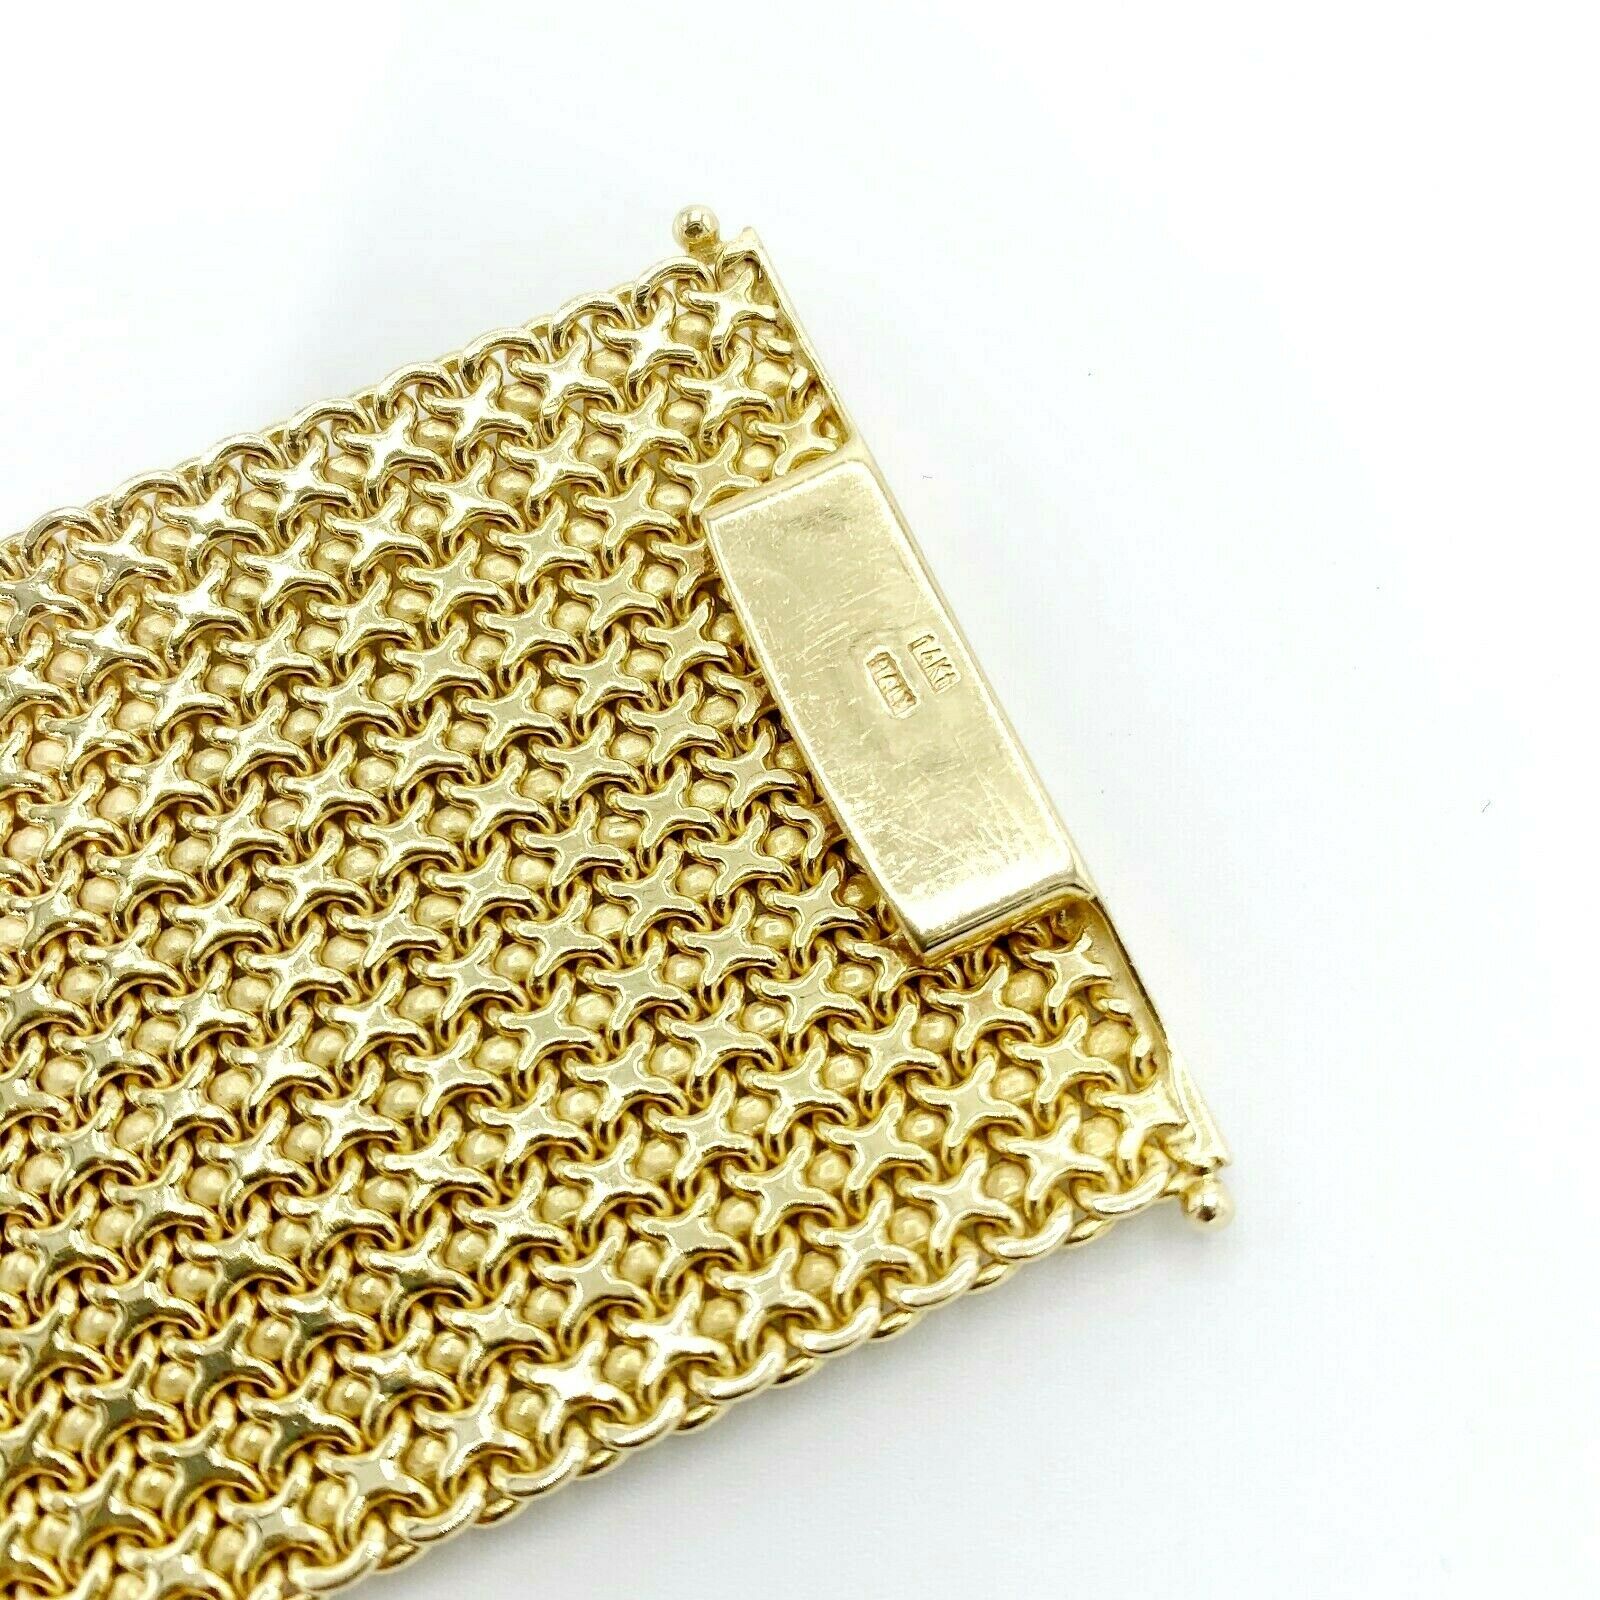 Buy 14K Italian Gold Bracelet, Yellow Gold, High Polished, Flexible,  Elegant Statement Piece Bracelet Online in India - Etsy